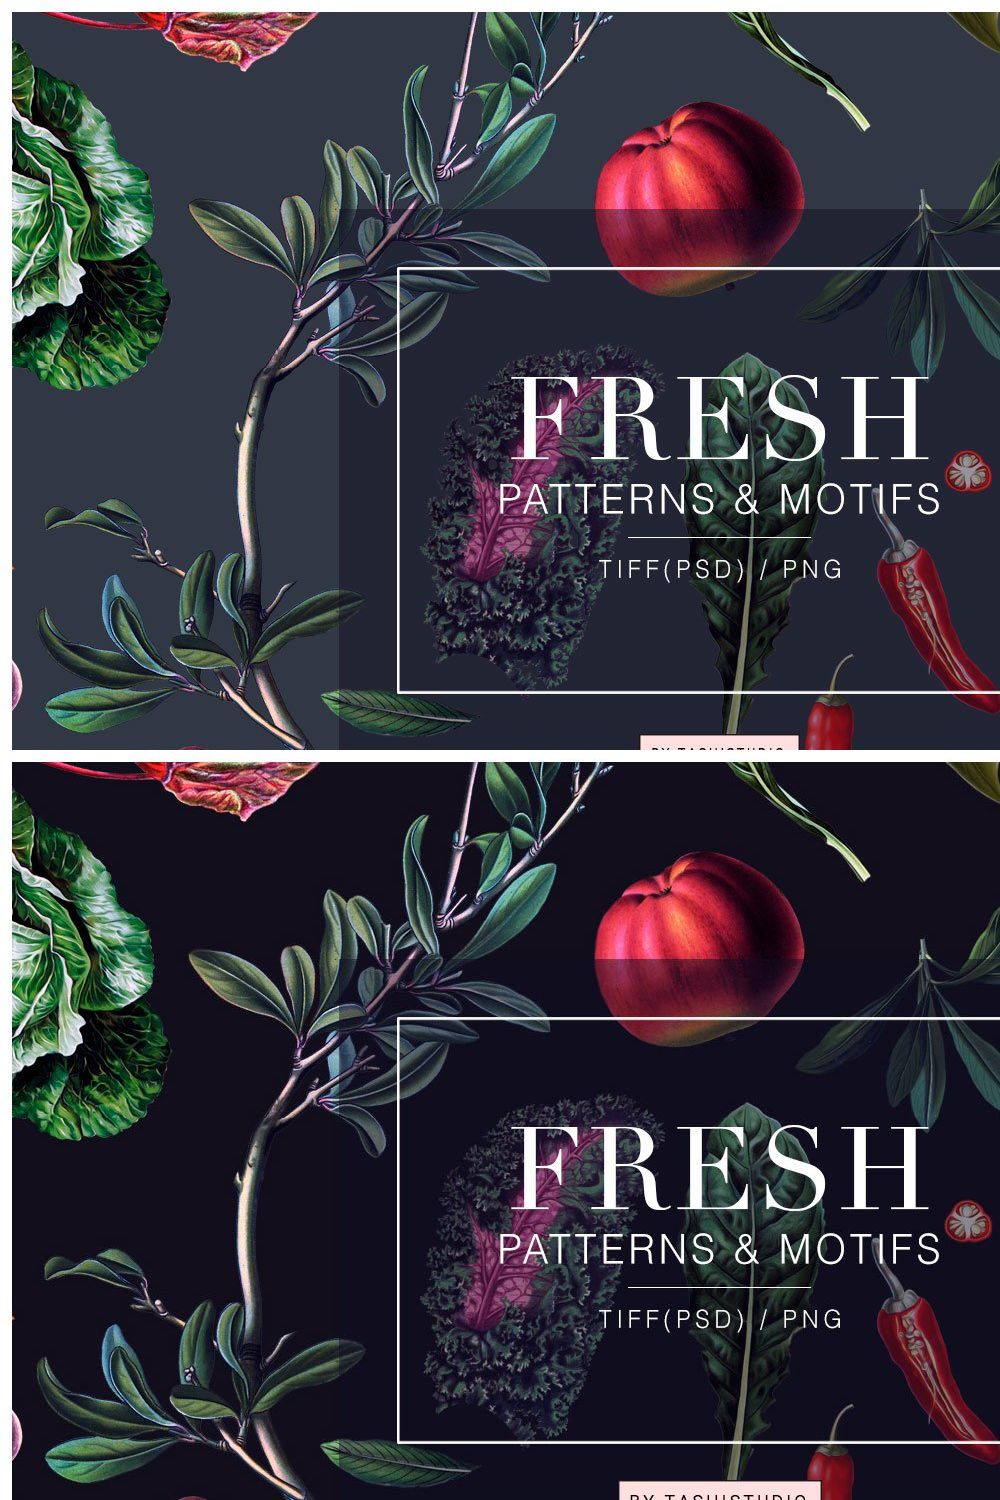 Fresh, Vegetables, Fruits & more! pinterest preview image.